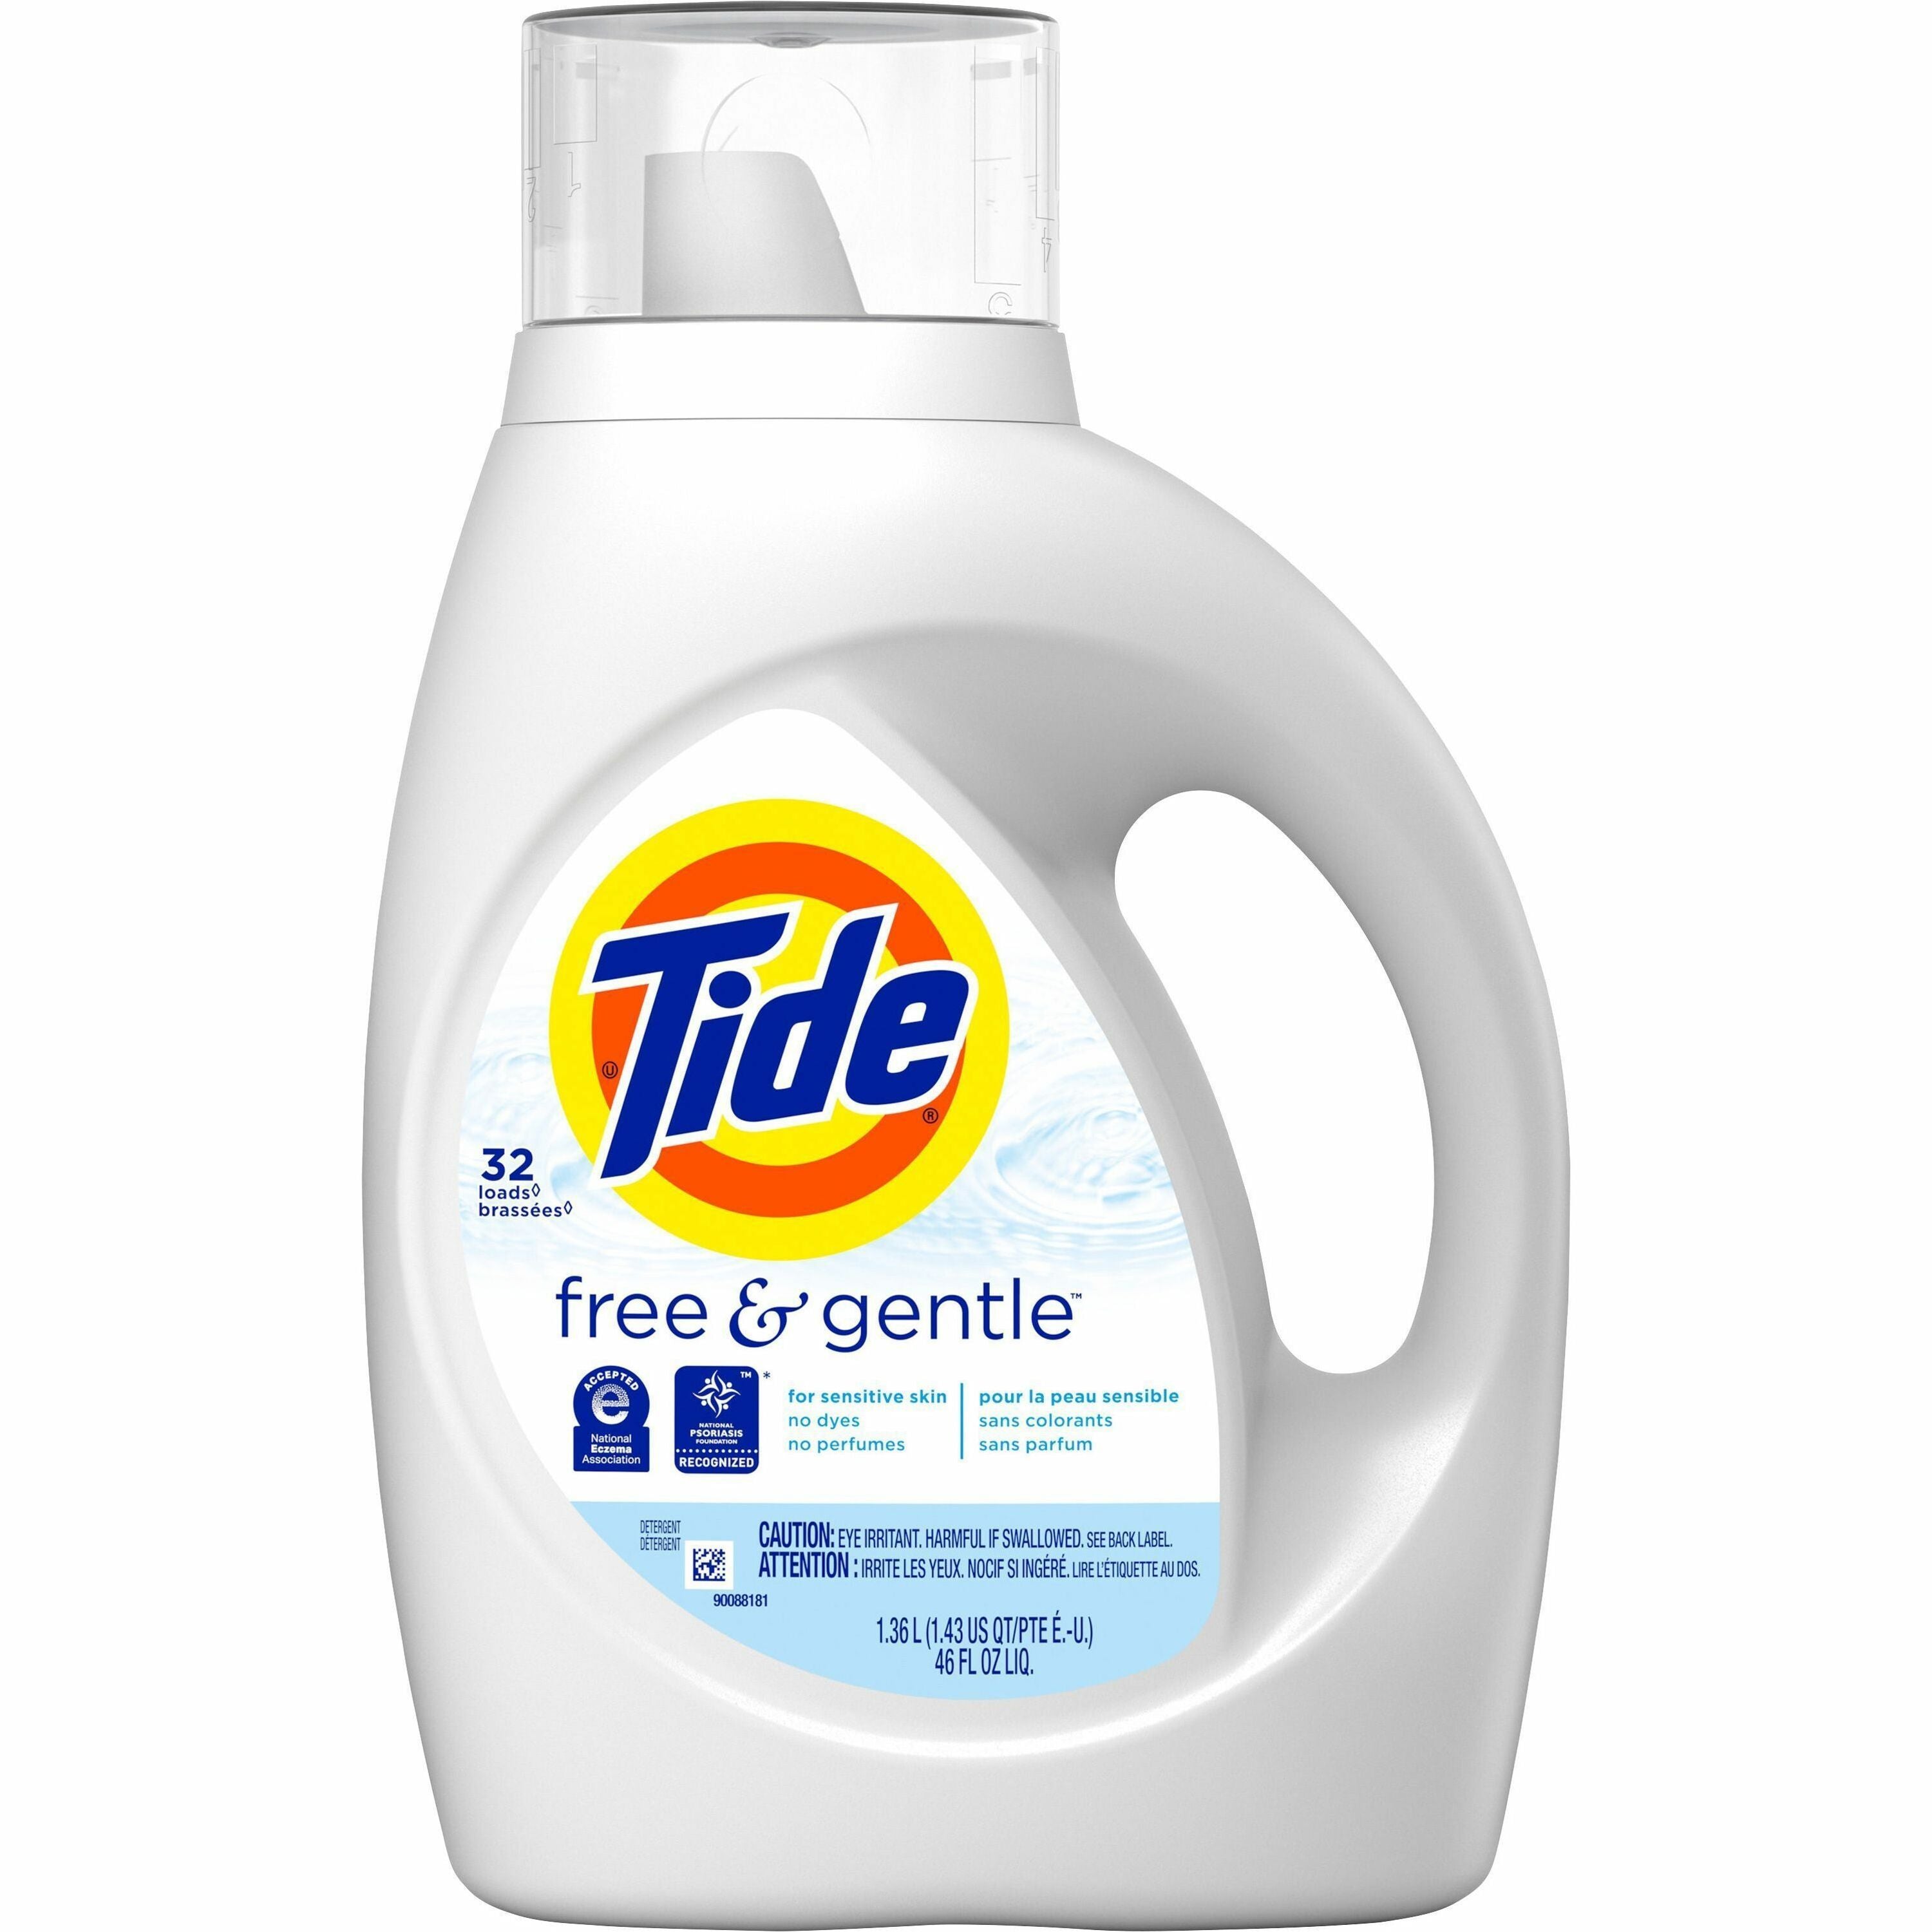 tide-free-&-gentle-detergent-46-fl-oz-14-quart-1-bottle-hypoallergenic-dye-free-fragrance-free_pgc41823 - 1